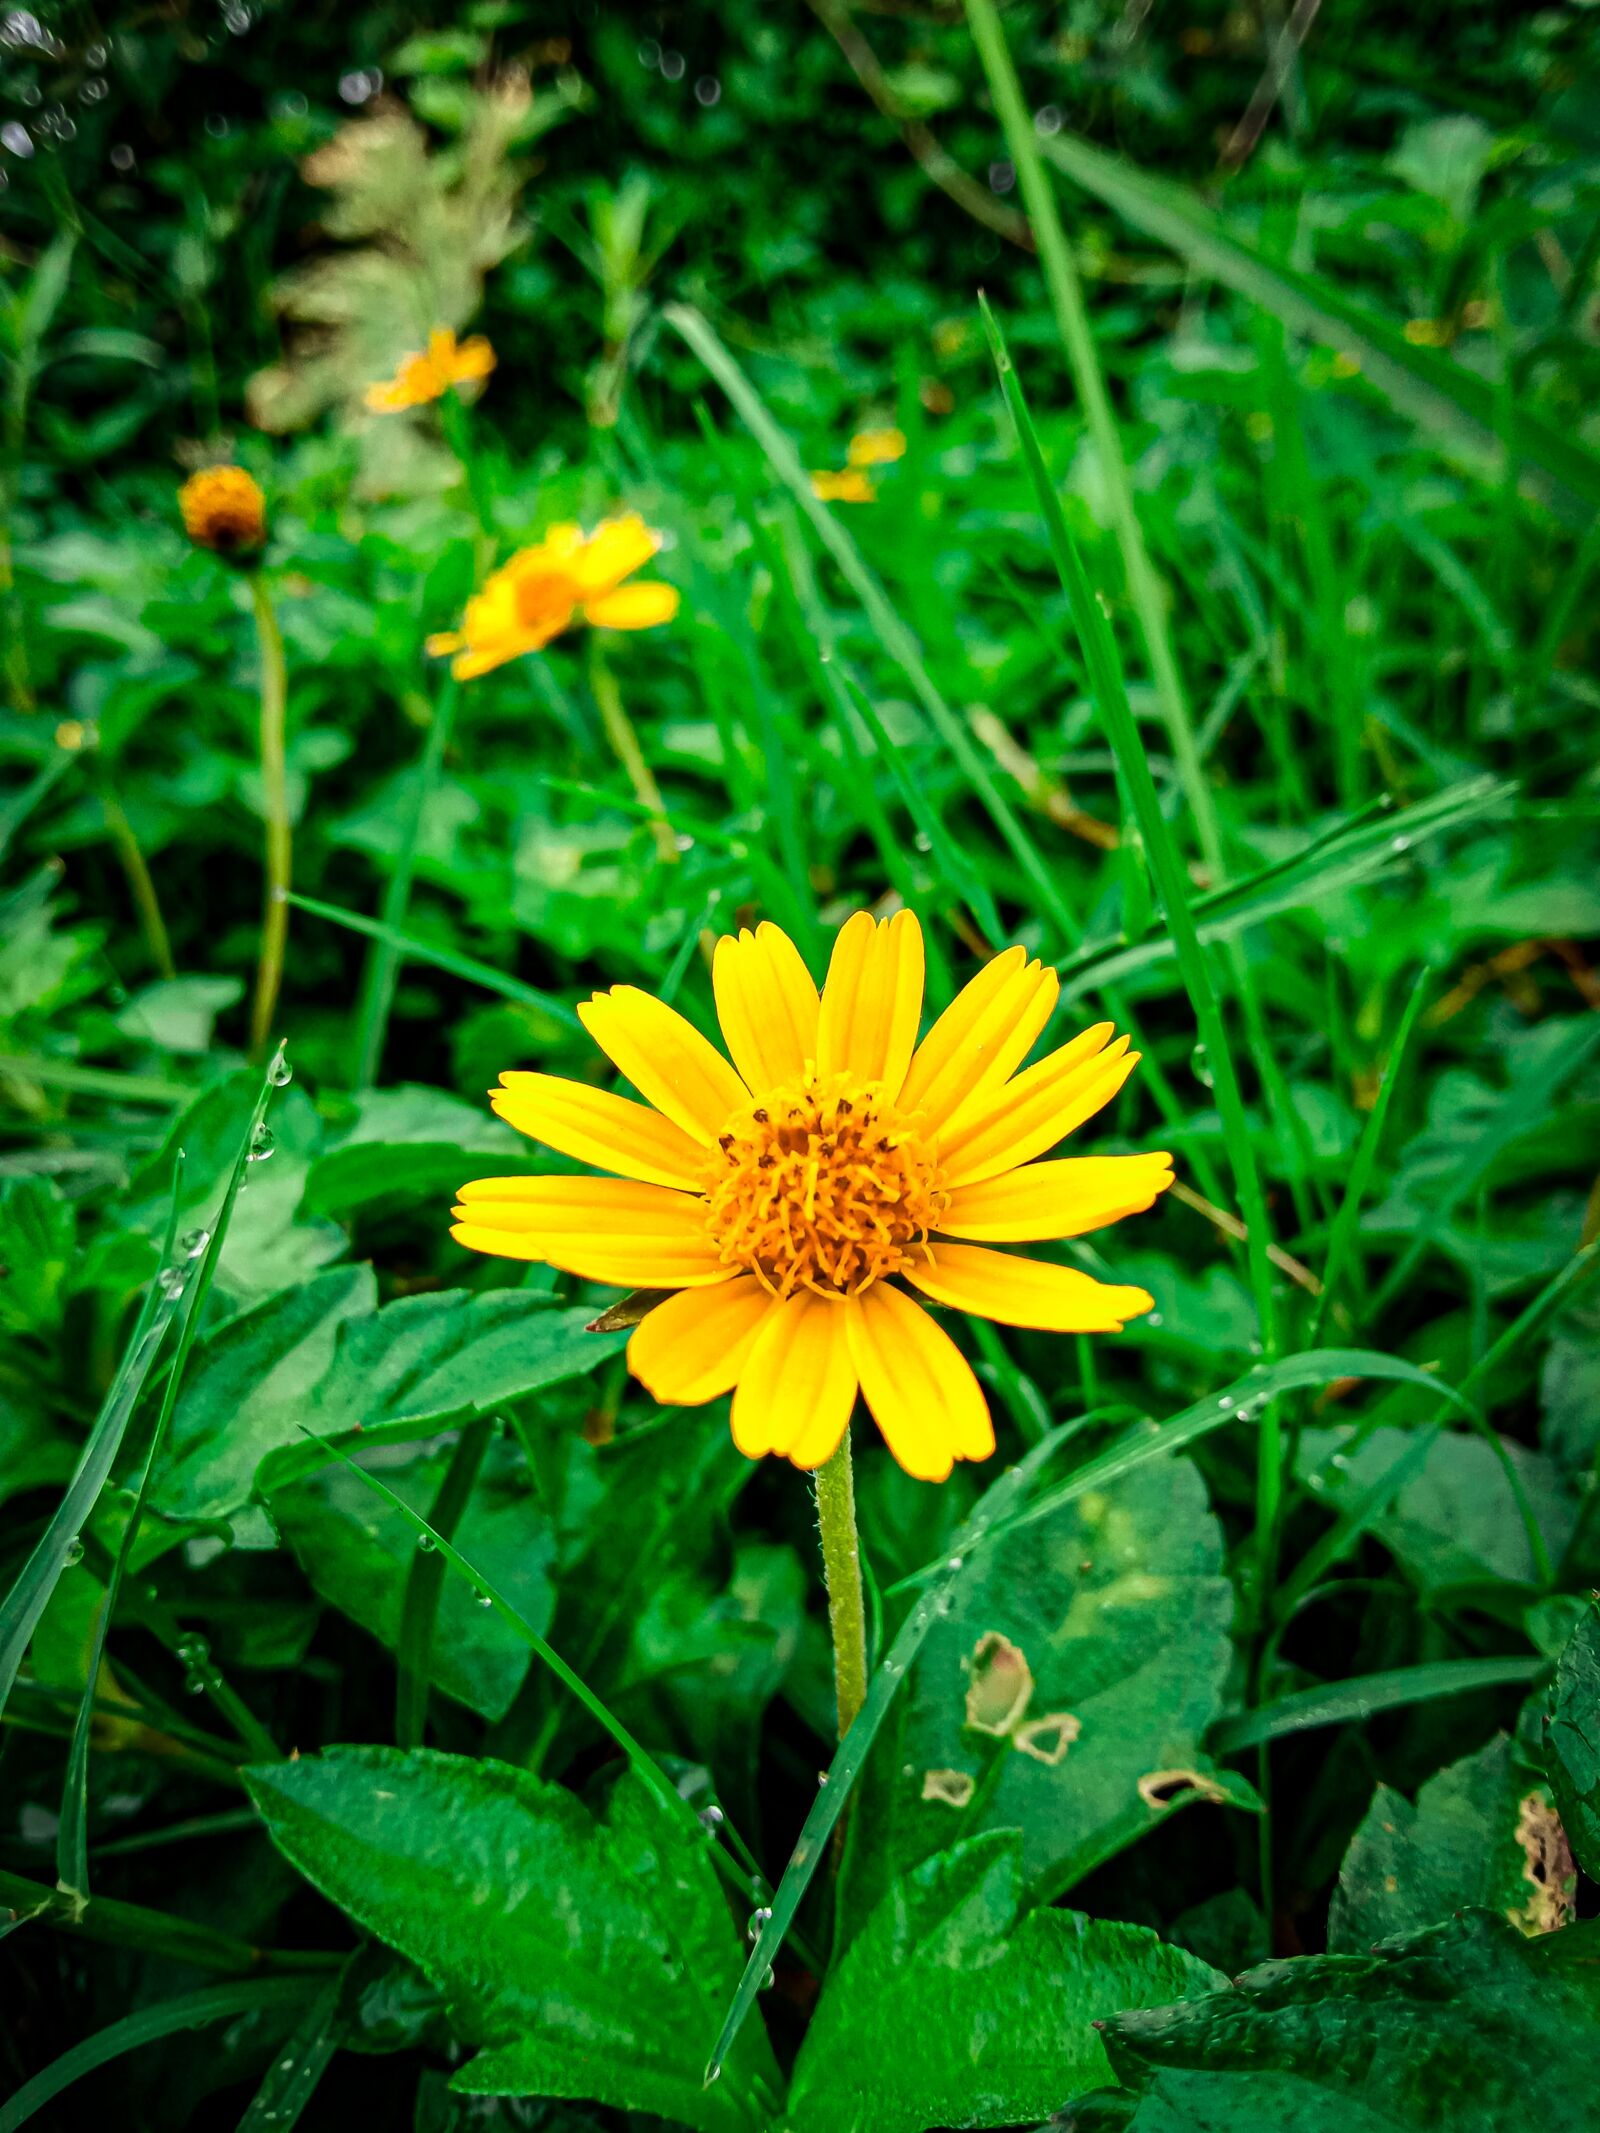 vivo 1901 sample photo. Flowers, cctv, yellow flower photography